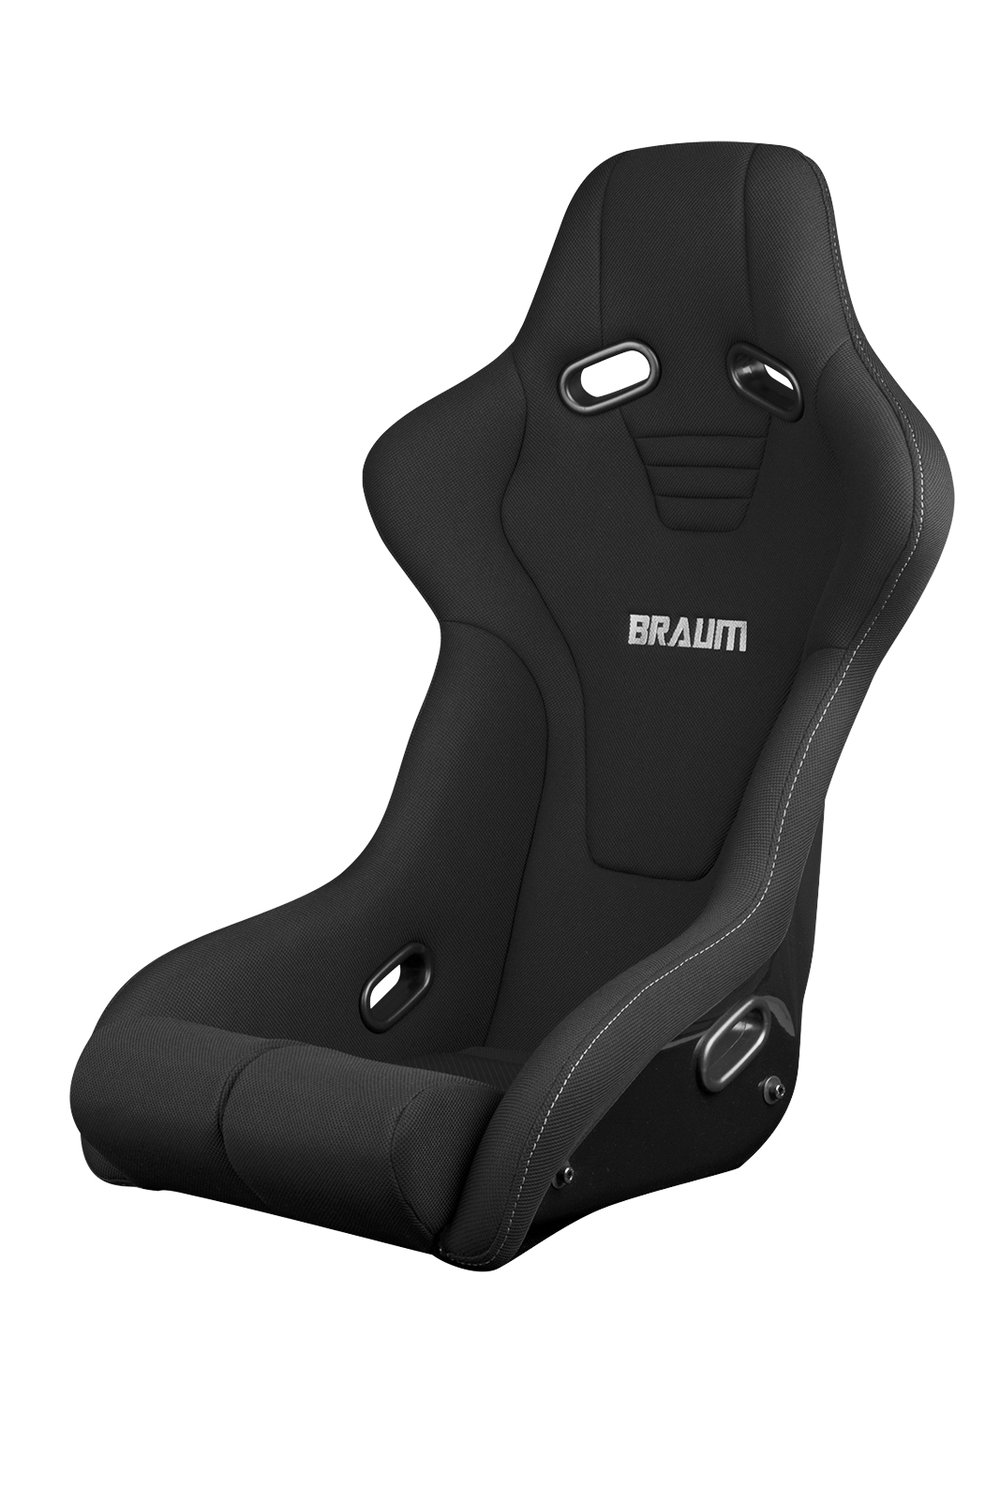 Falcon R Series - Universal Braum Racing Seat - SINGLE Seat